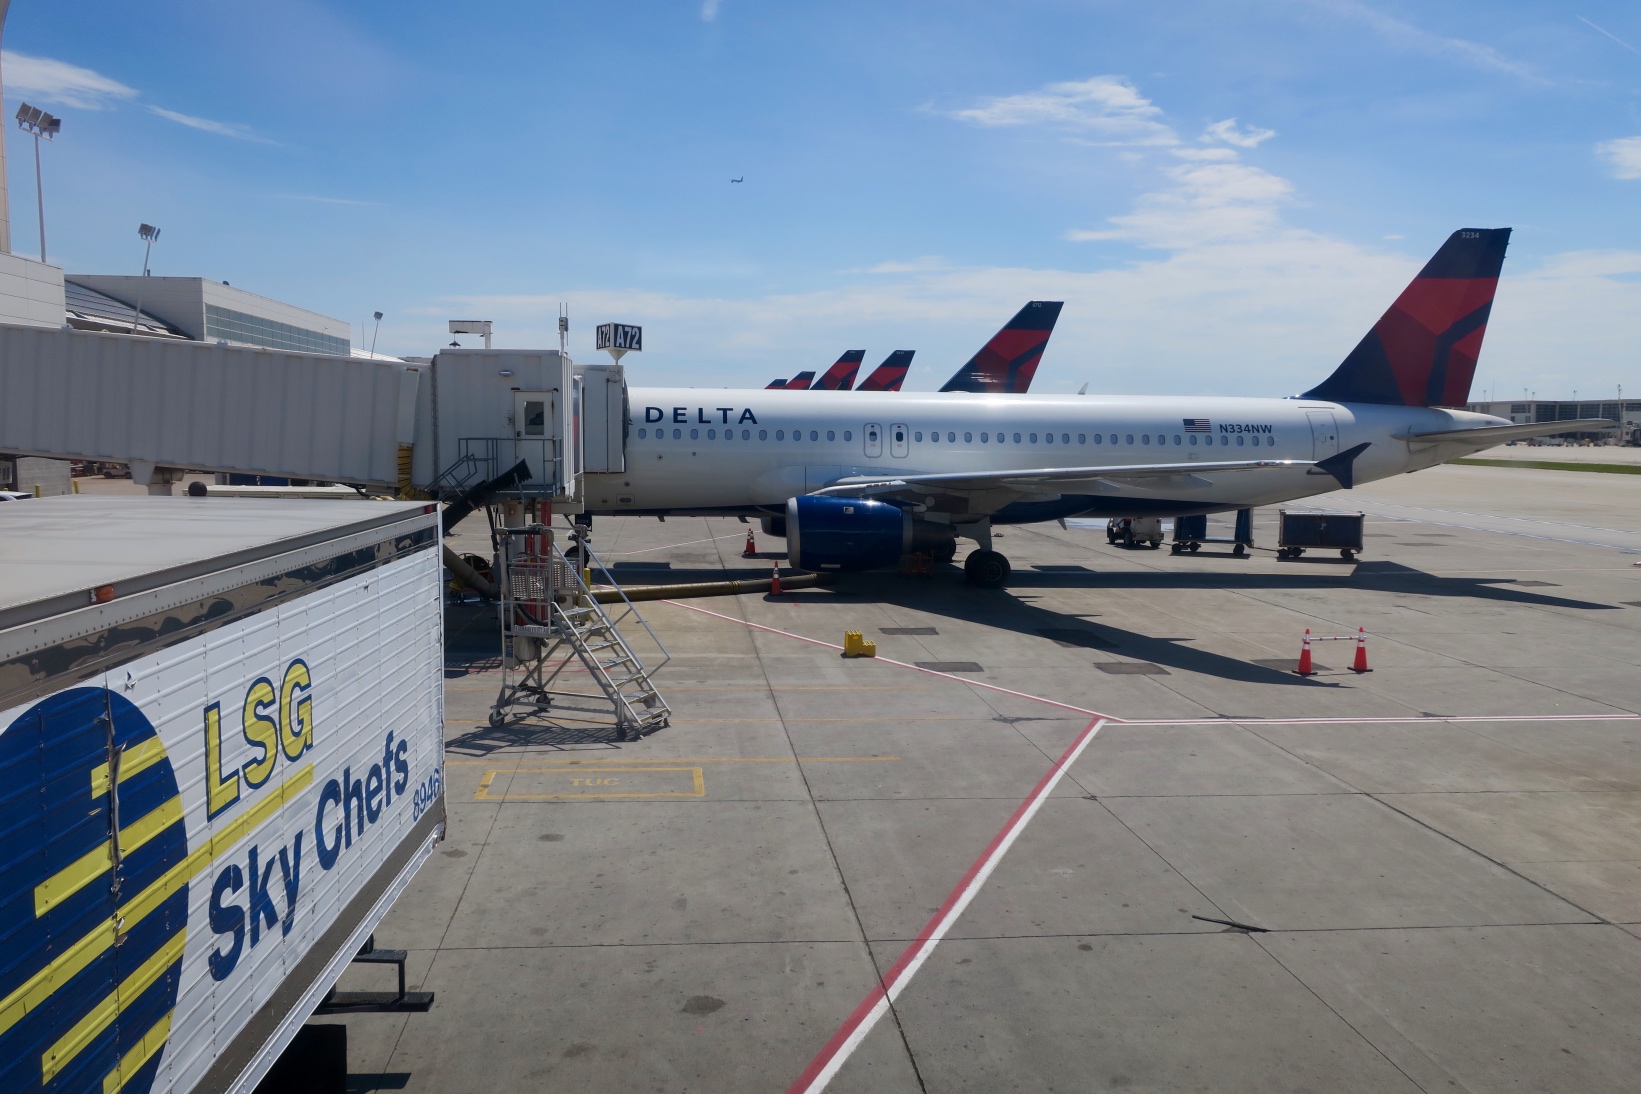 Delta planes at Detroit Airport